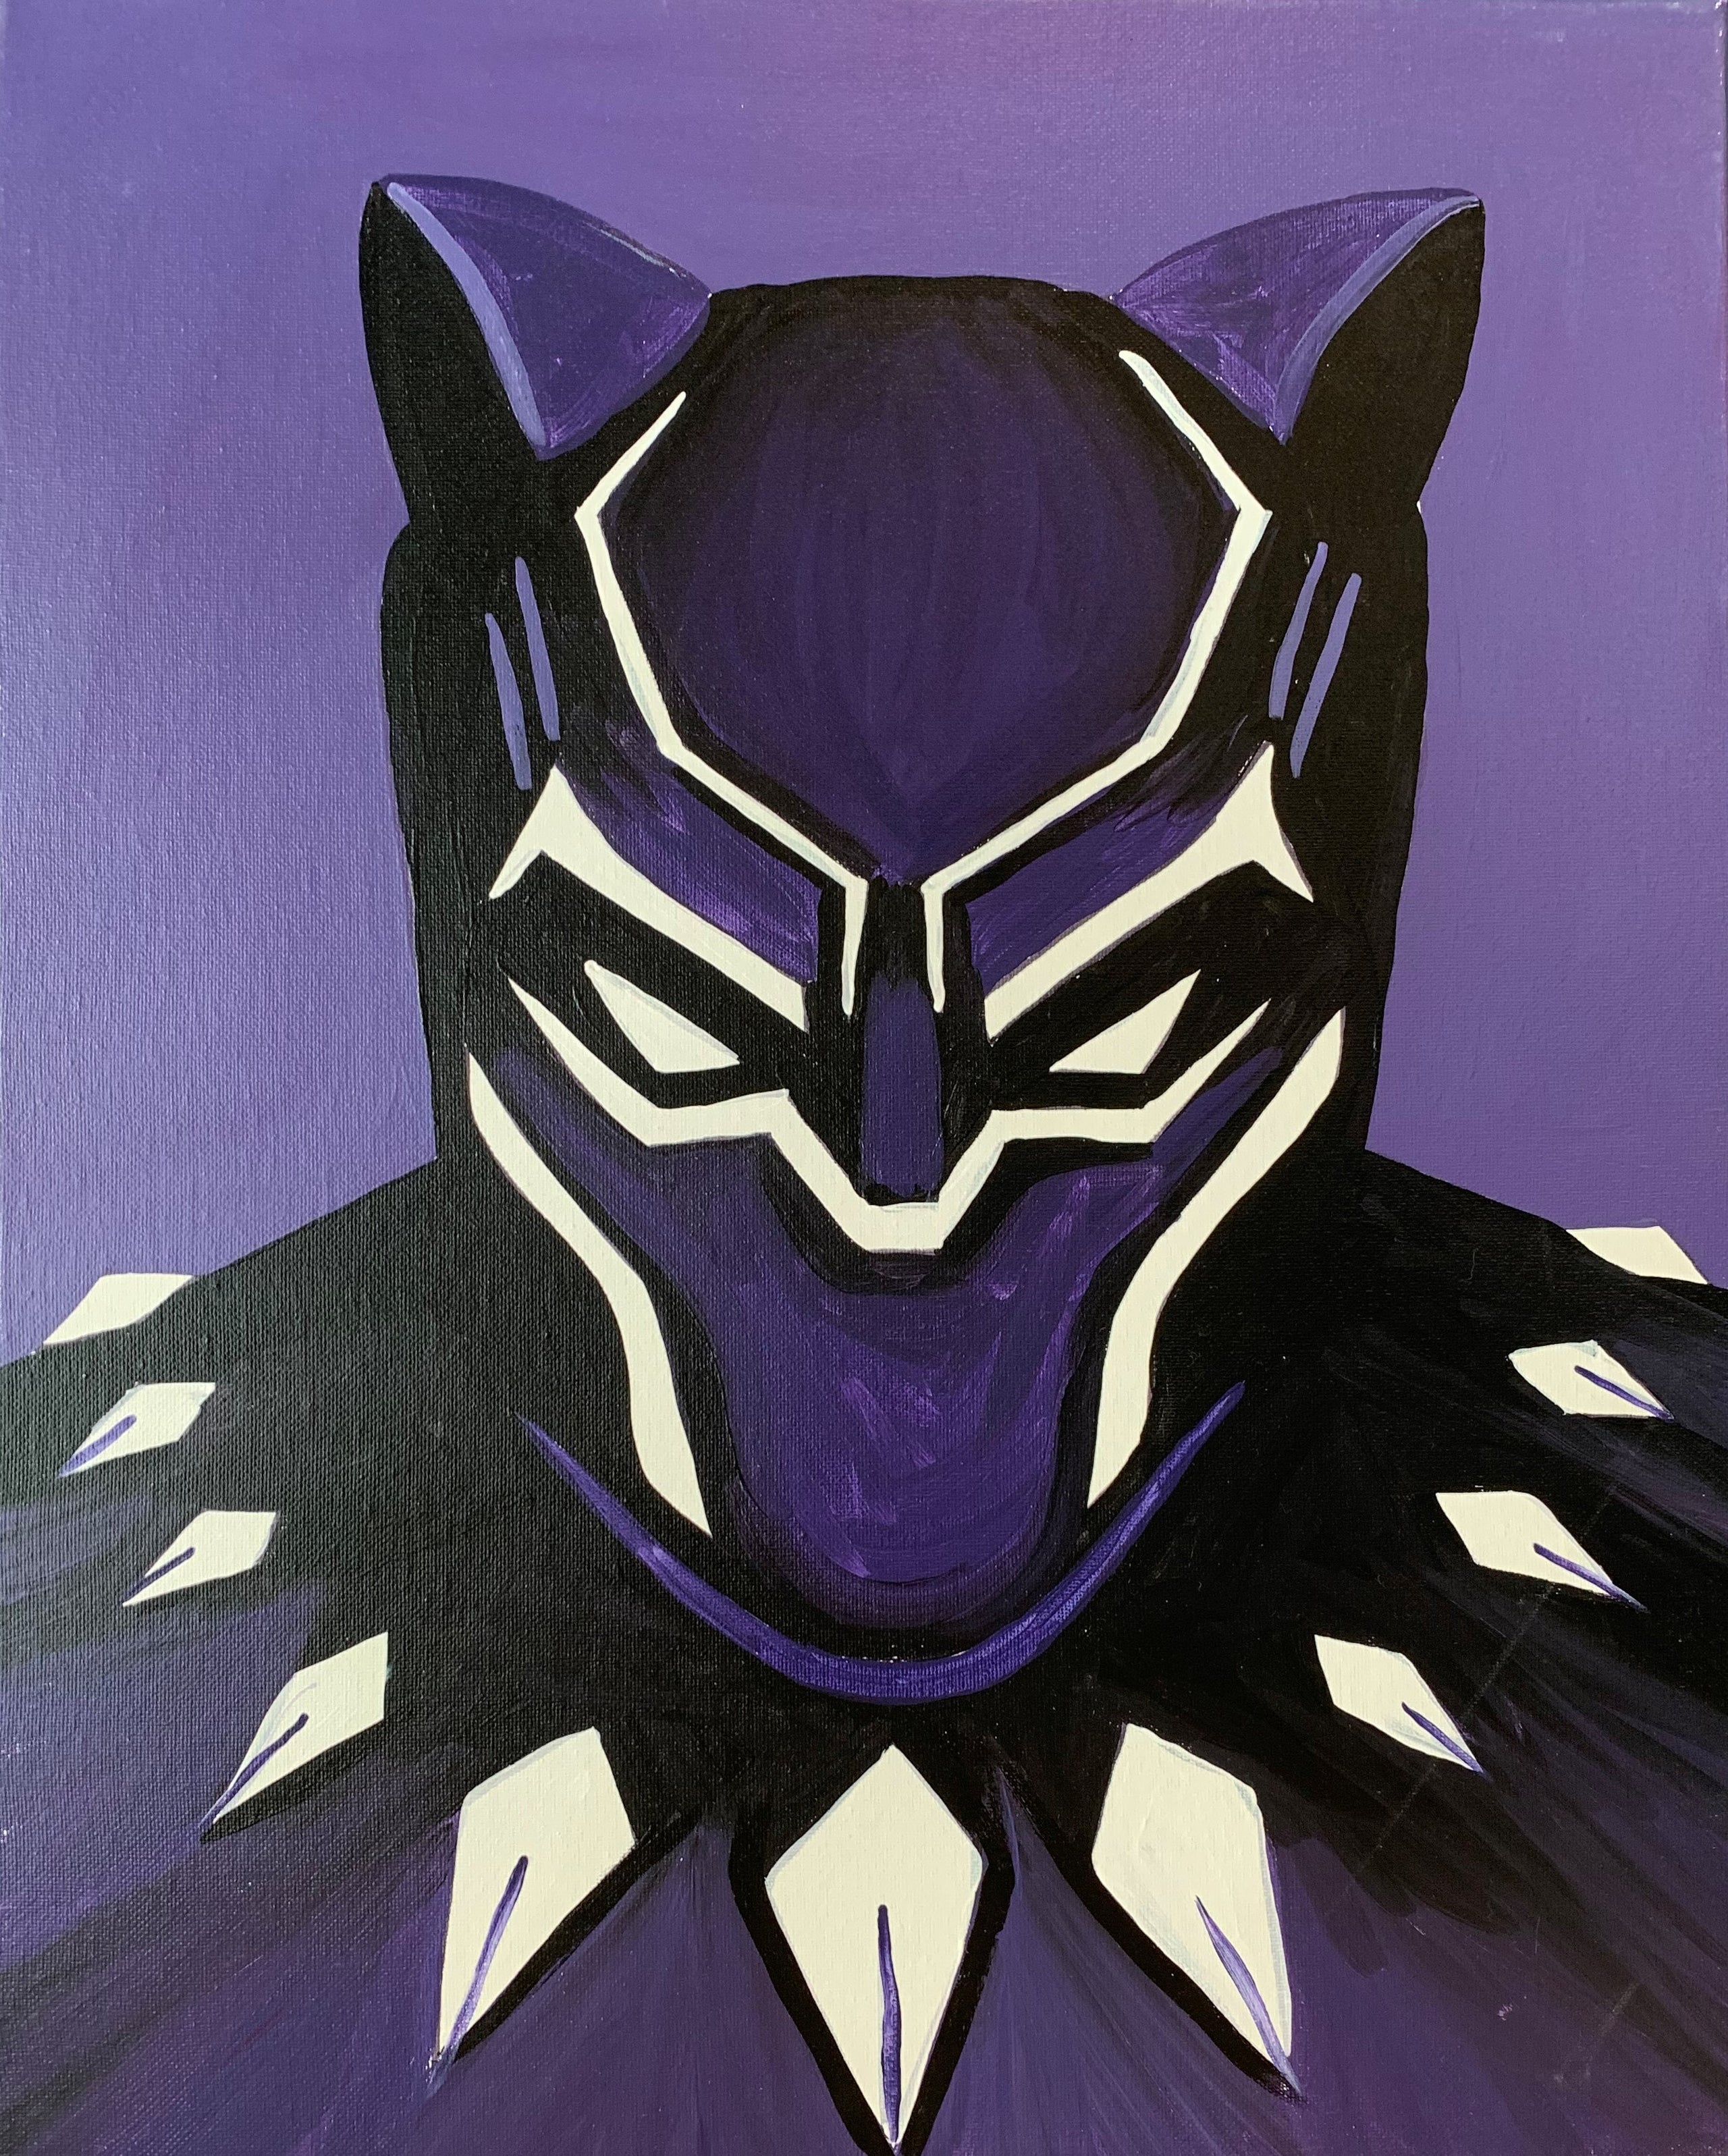 black panther face paint